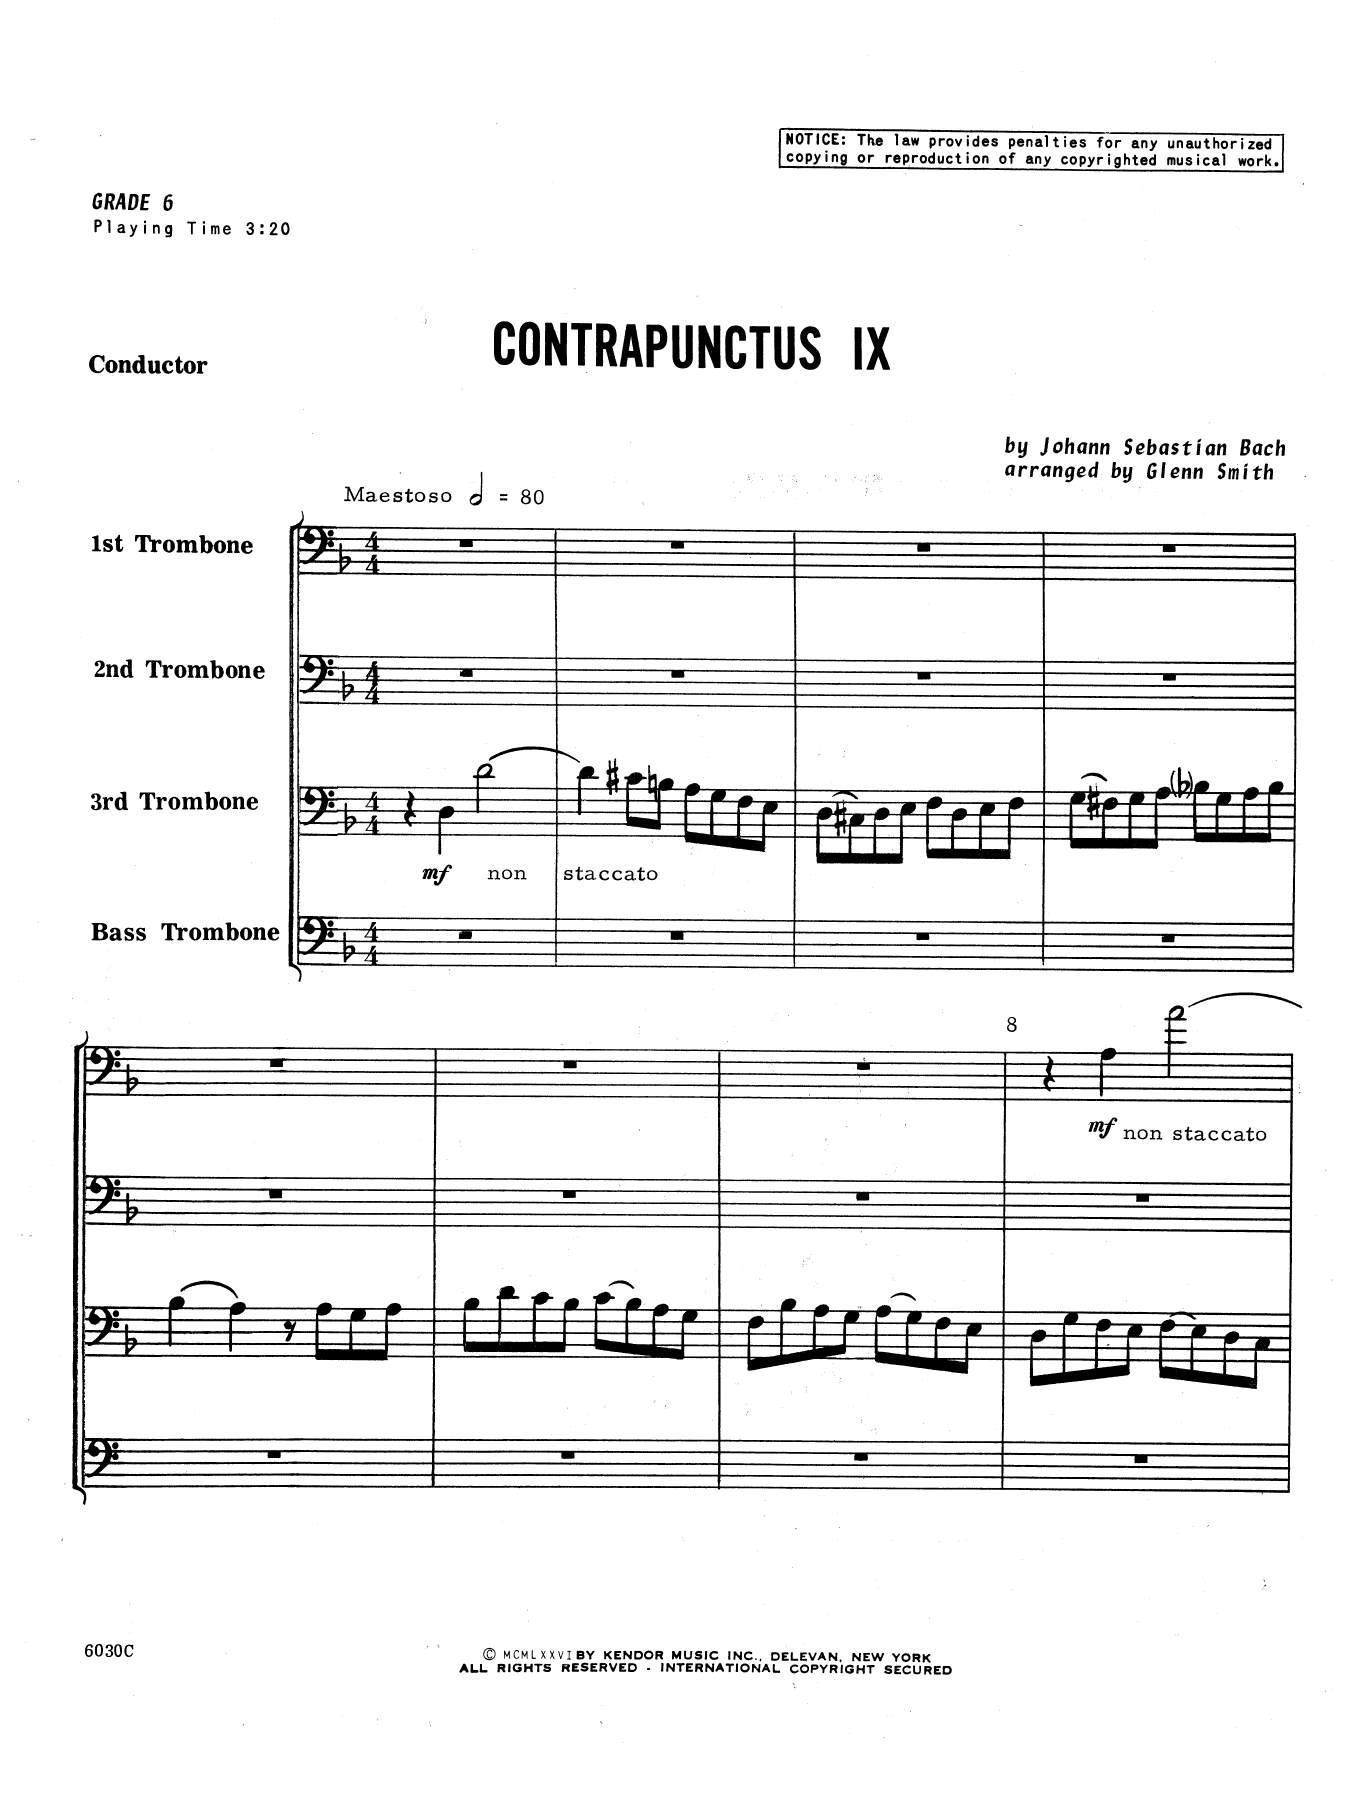 Contrapunctus IX - Full Score (Brass Ensemble) von Glen Smith